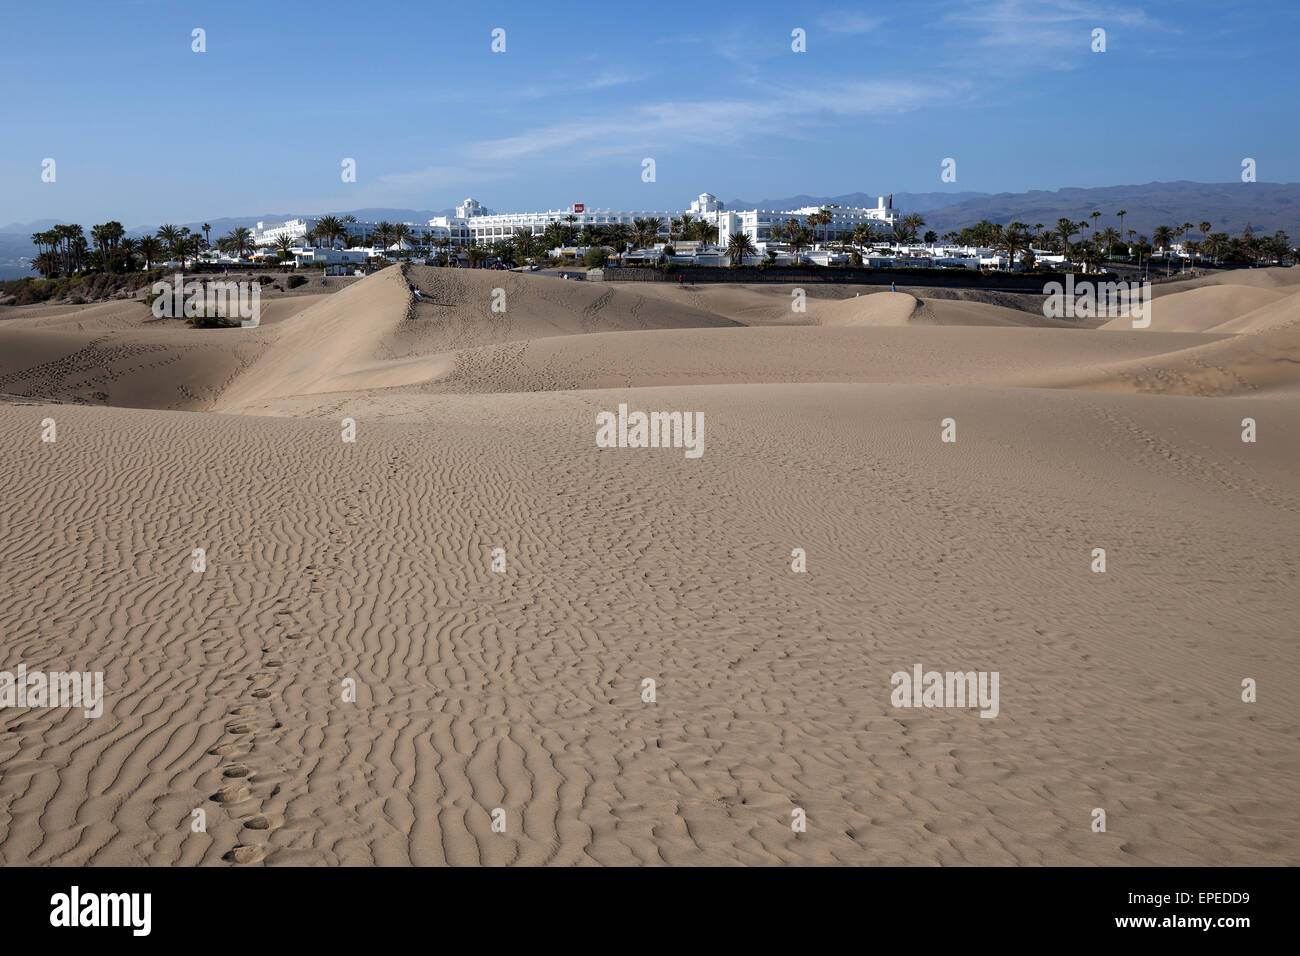 Dunes, Maspalomas Dunes Nature Reserve, the RIU Hotel behind, Gran Canaria, Canary Islands, Spain Stock Photo